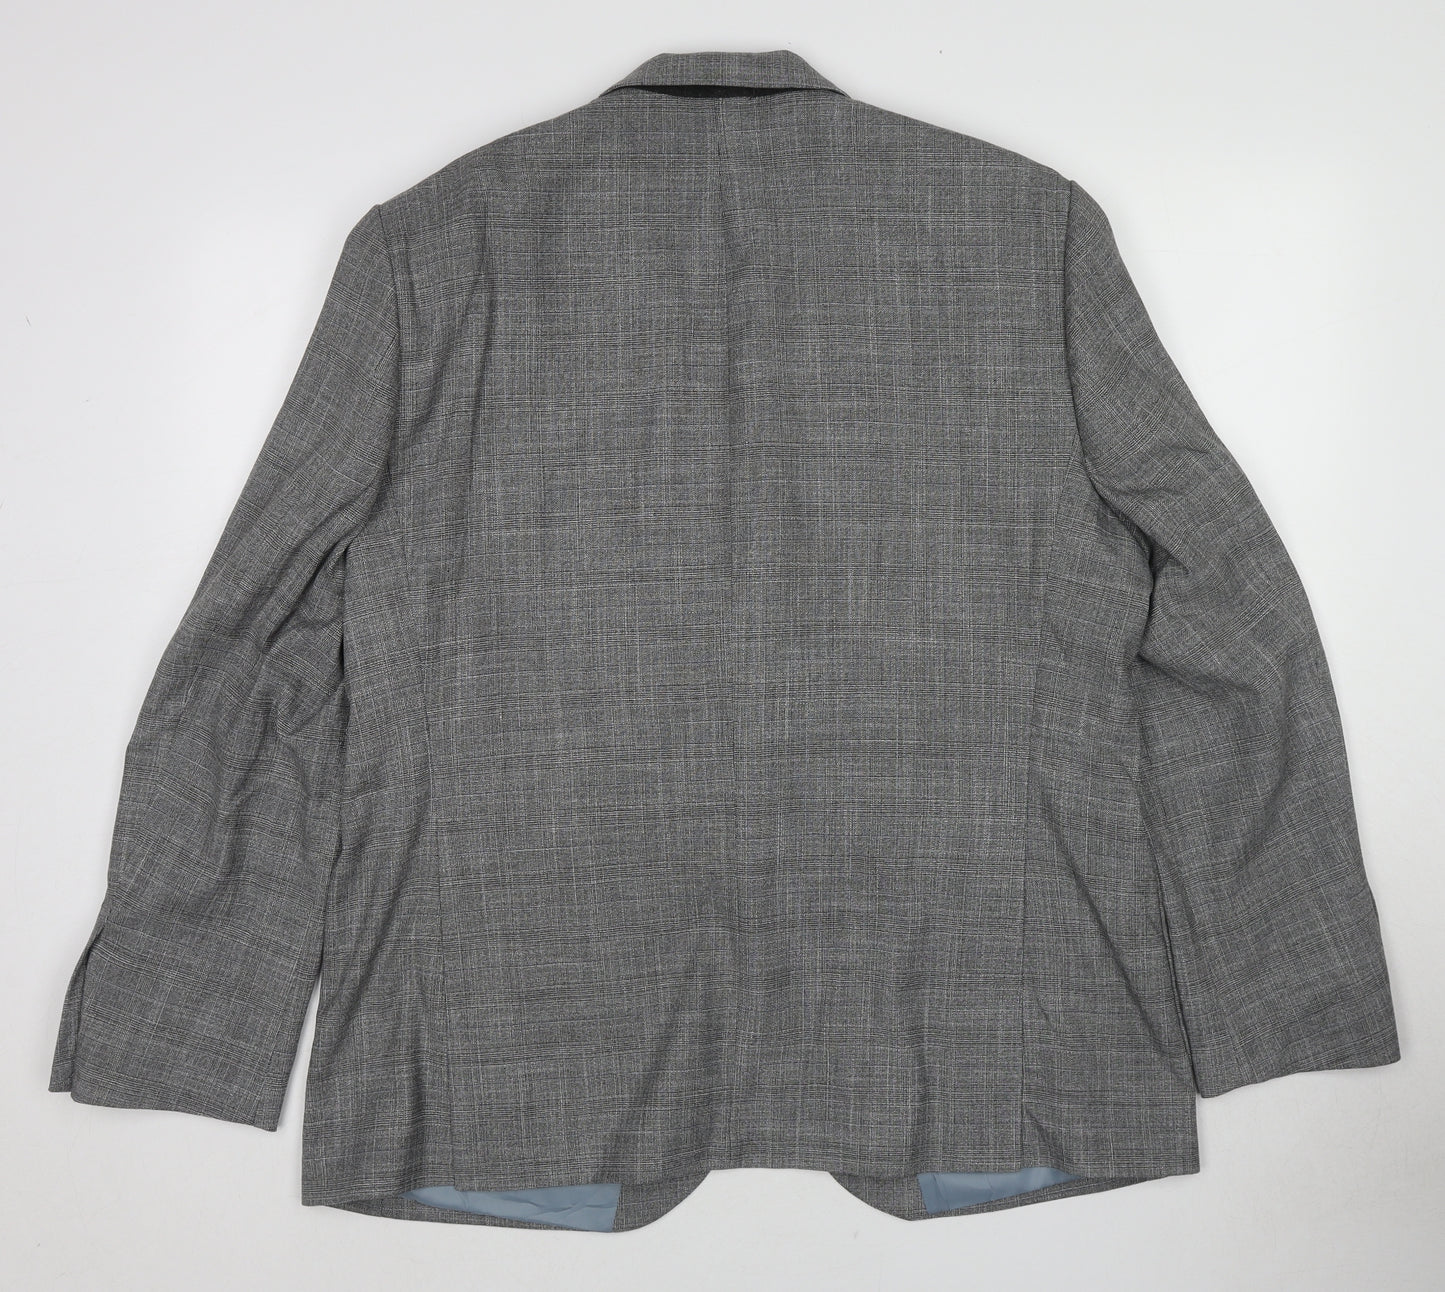 Marks and Spencer Mens Grey Plaid Polyester Jacket Suit Jacket Size 44 Regular